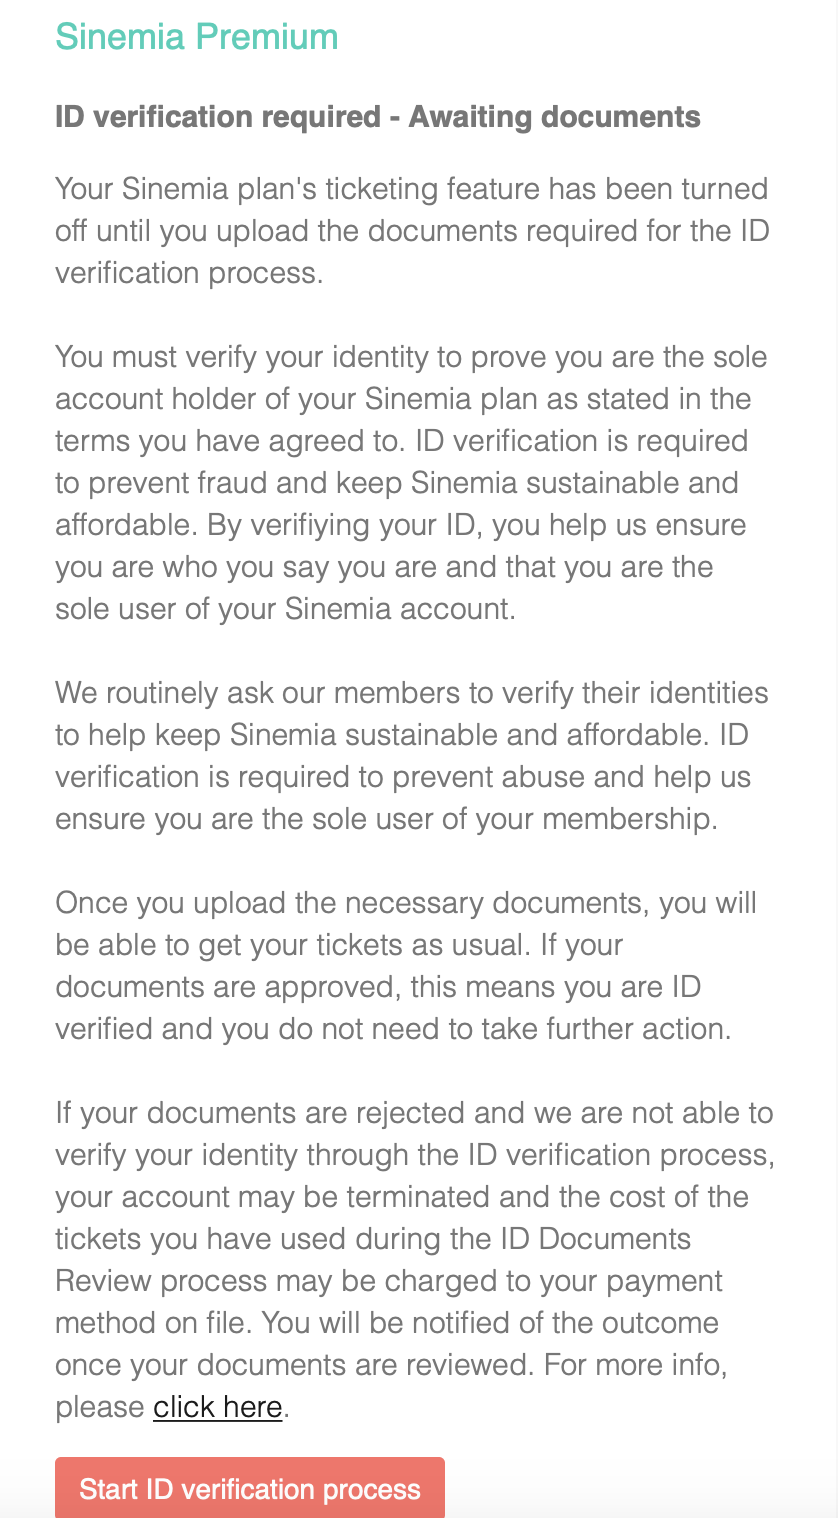 Sinemia Gov't ID Verification Requirement